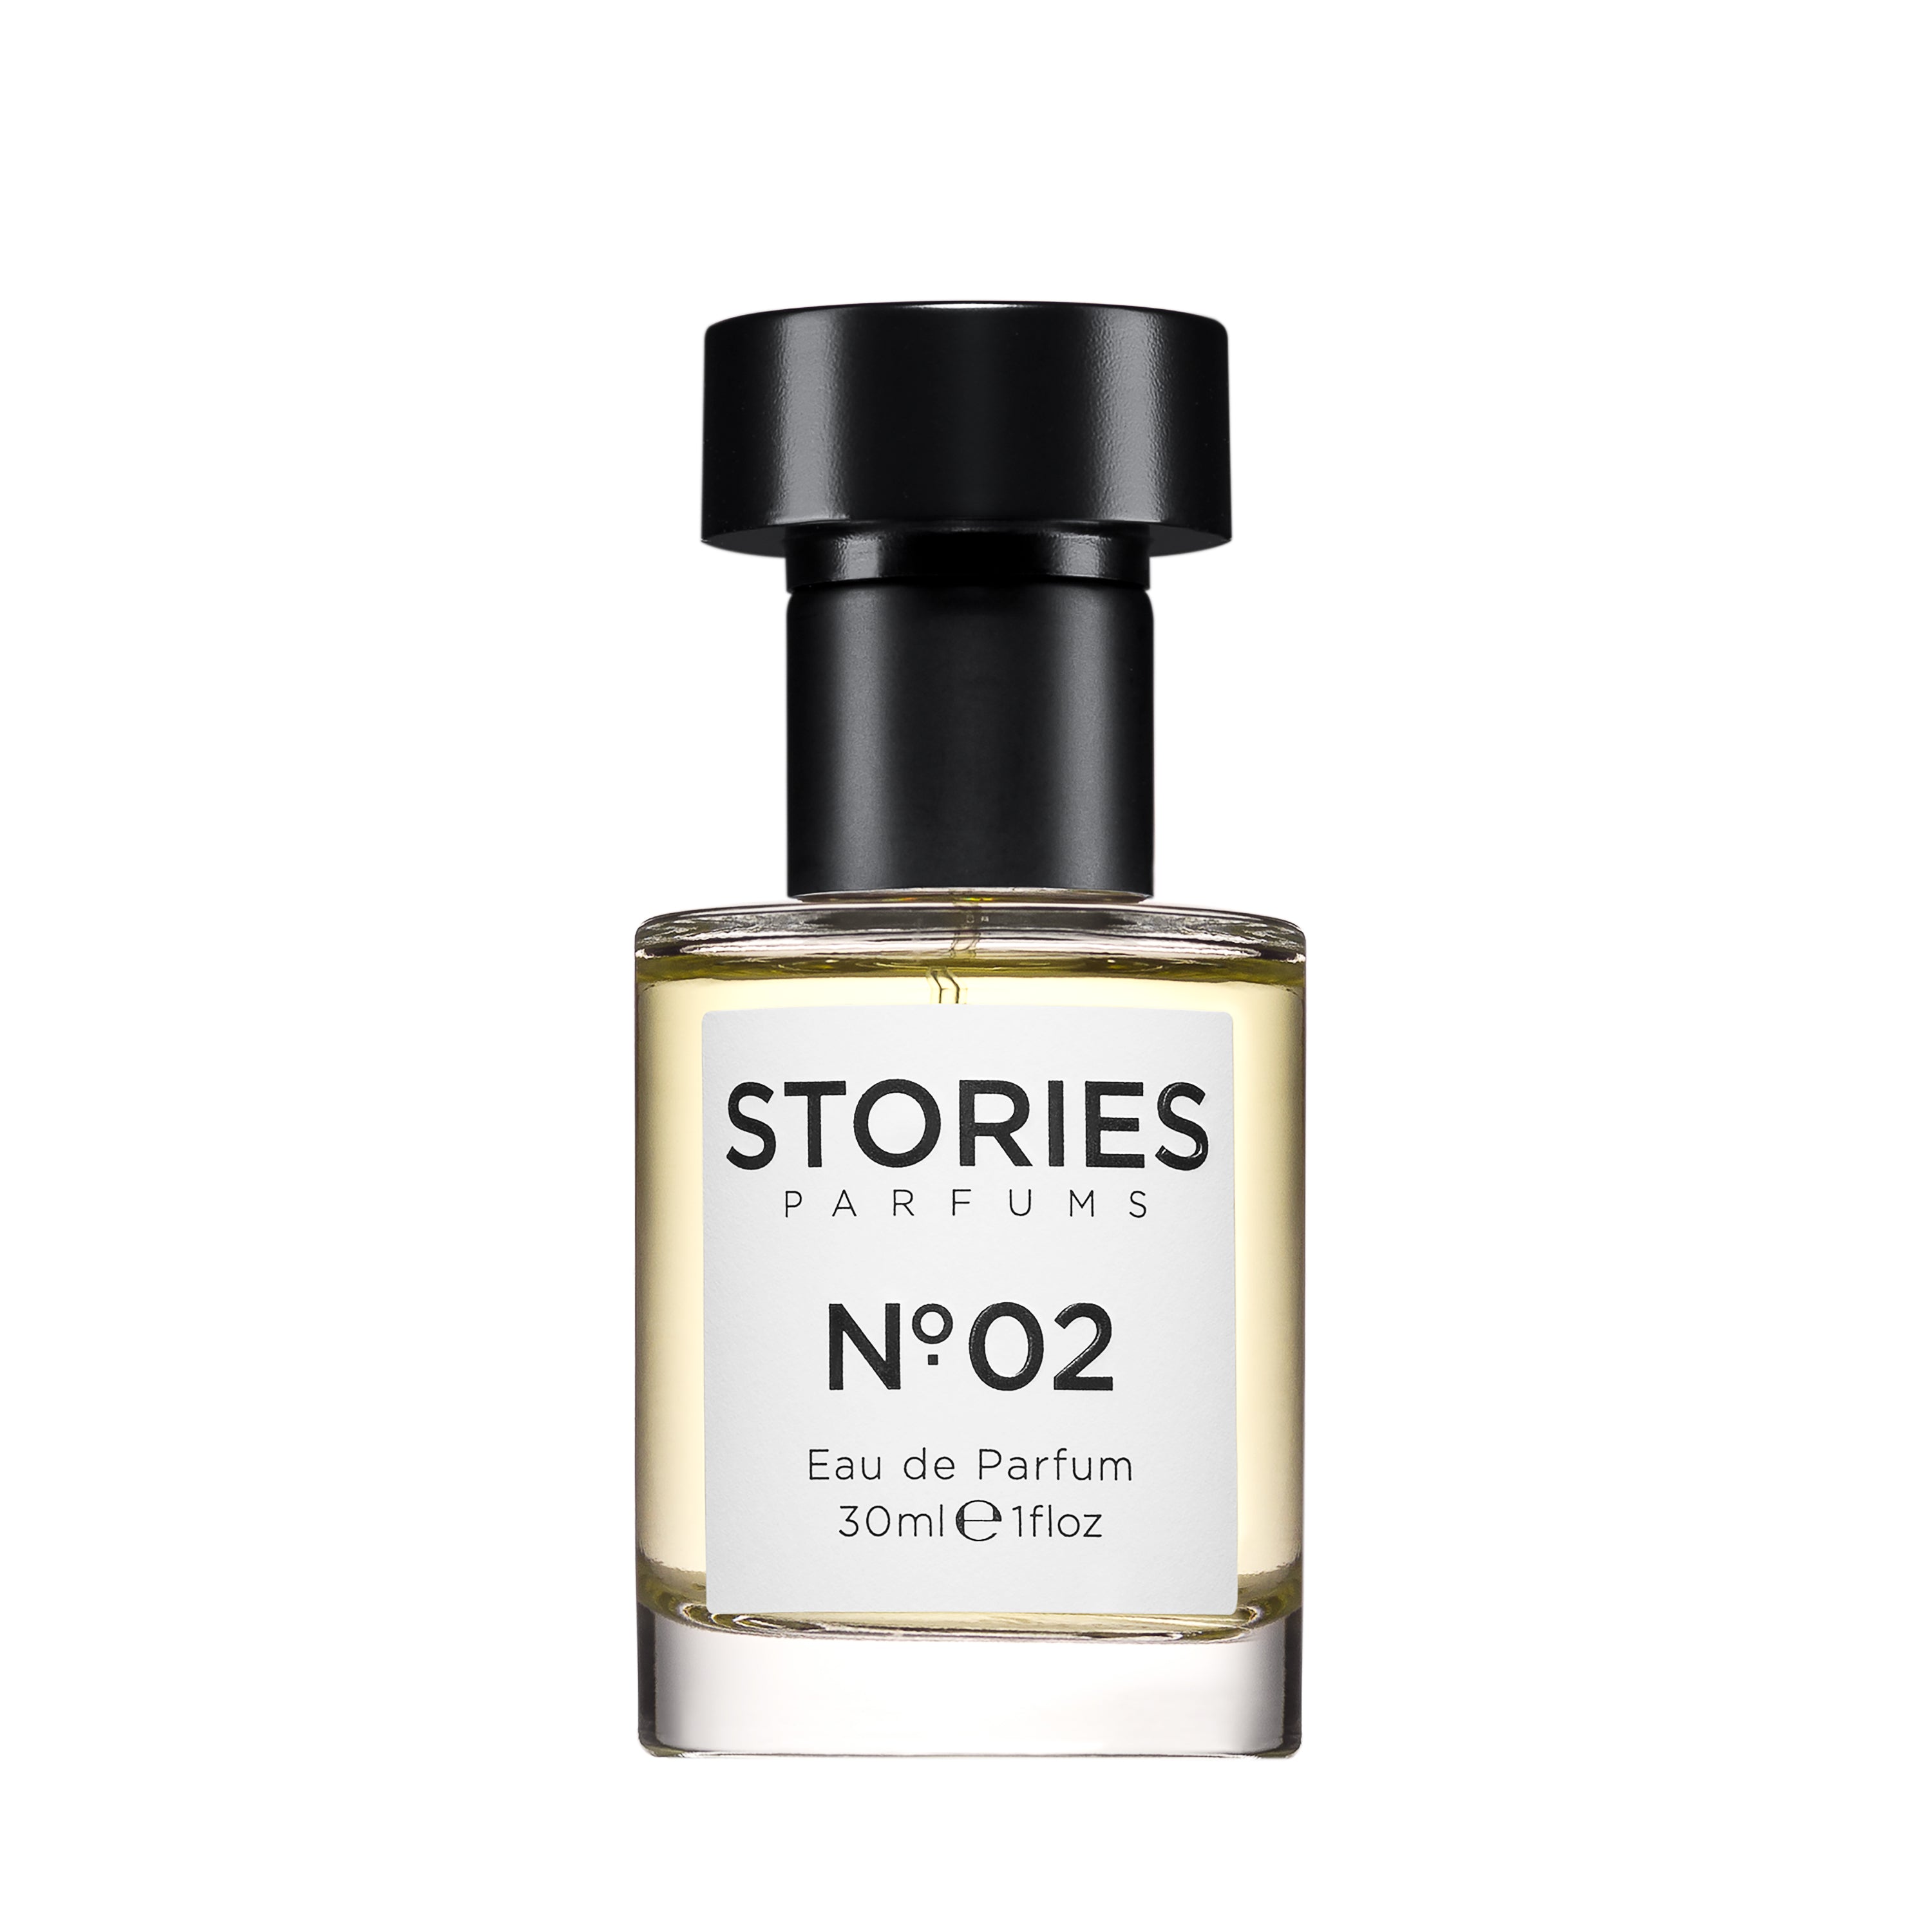 REFILL of STORIES Nº.02 Eau de Parfum 30ml